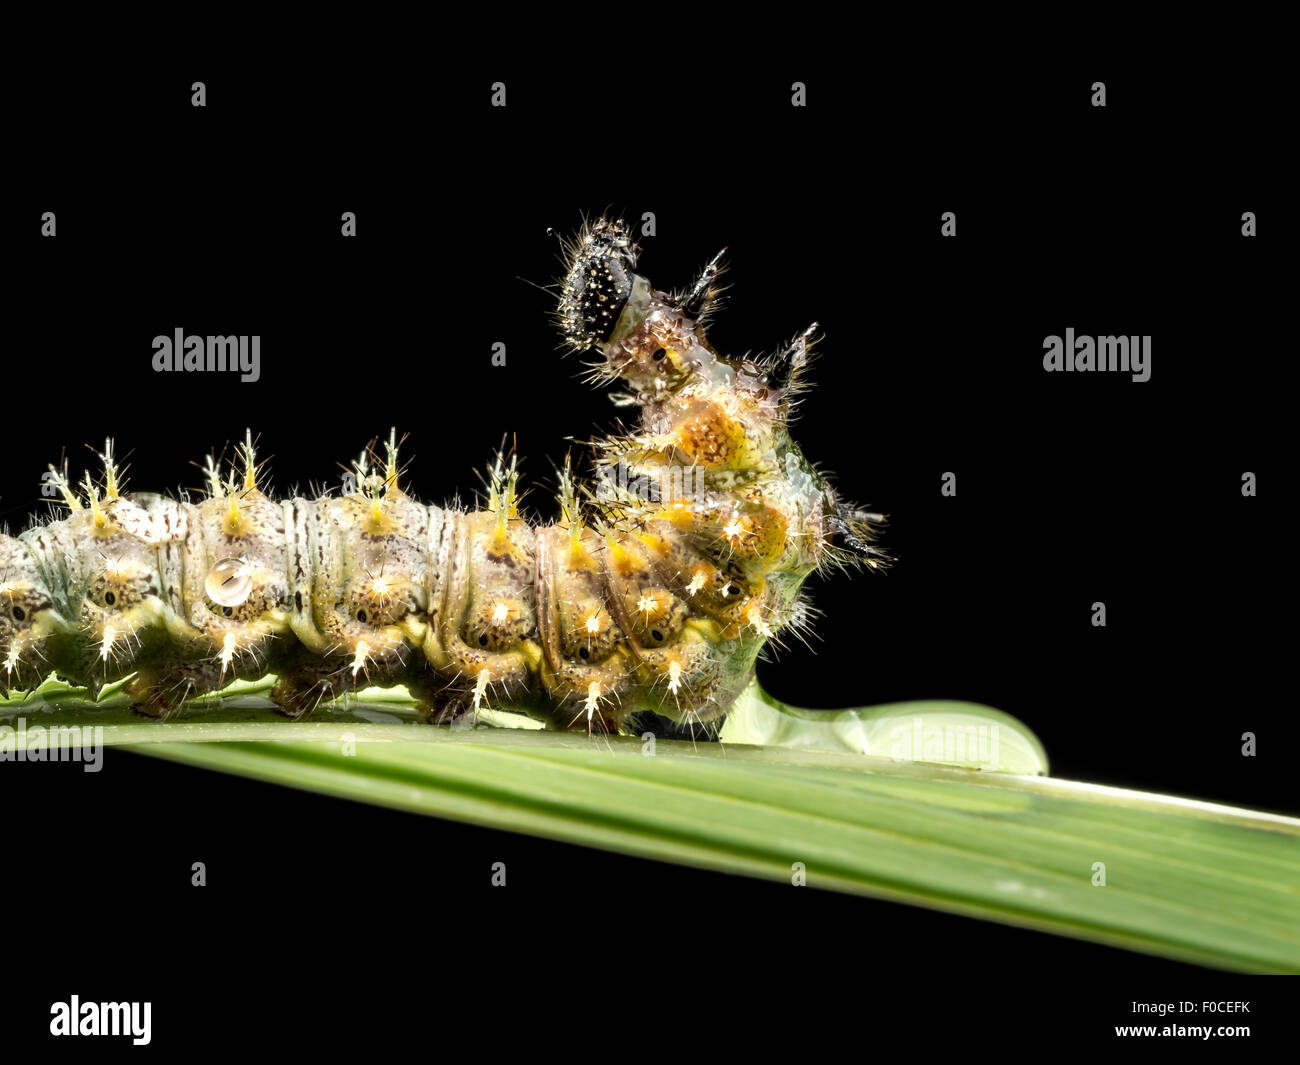 Caterpillar crawling on green leaf on black background Stock Photo